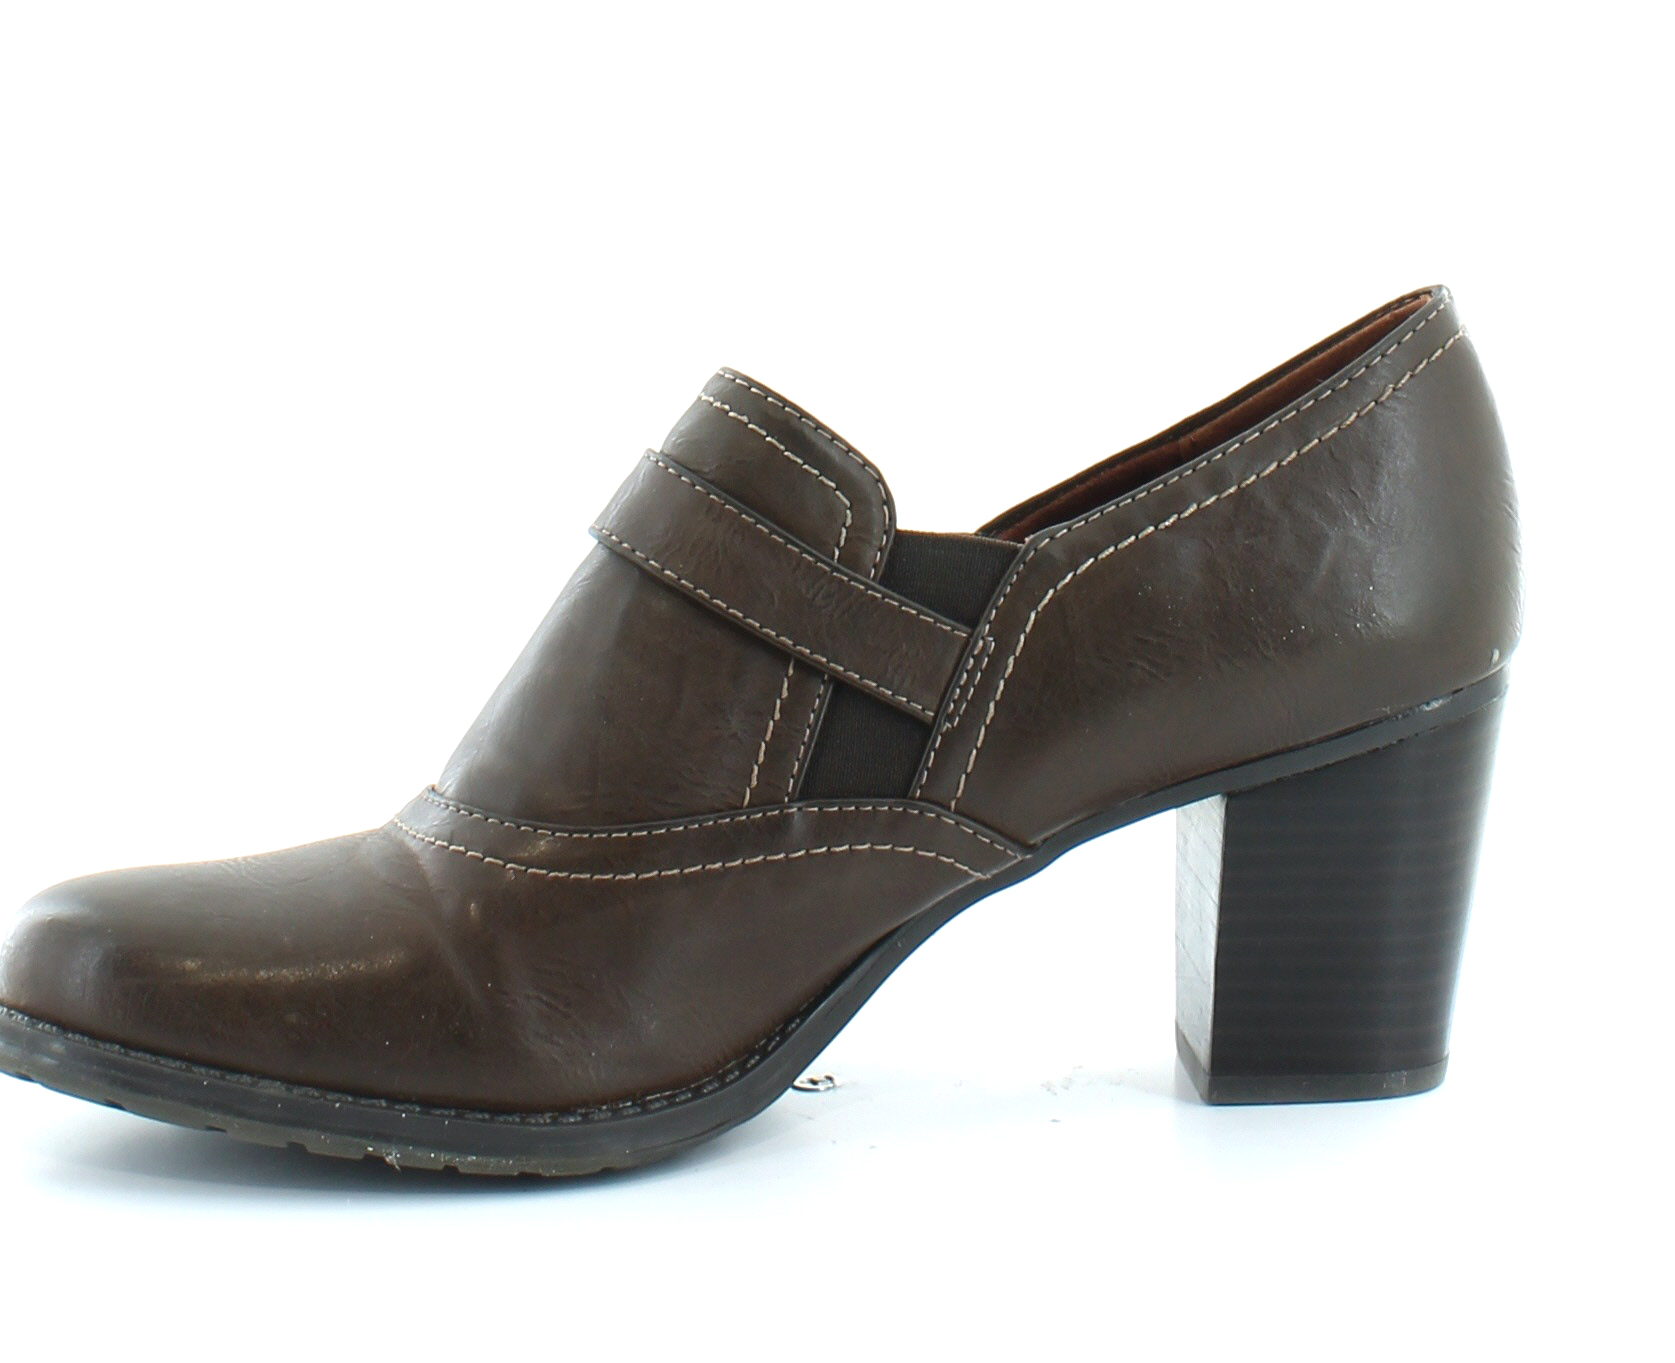 Details about Naturalizer Deangela Brown Womens Shoes Size 11 M Heels ...